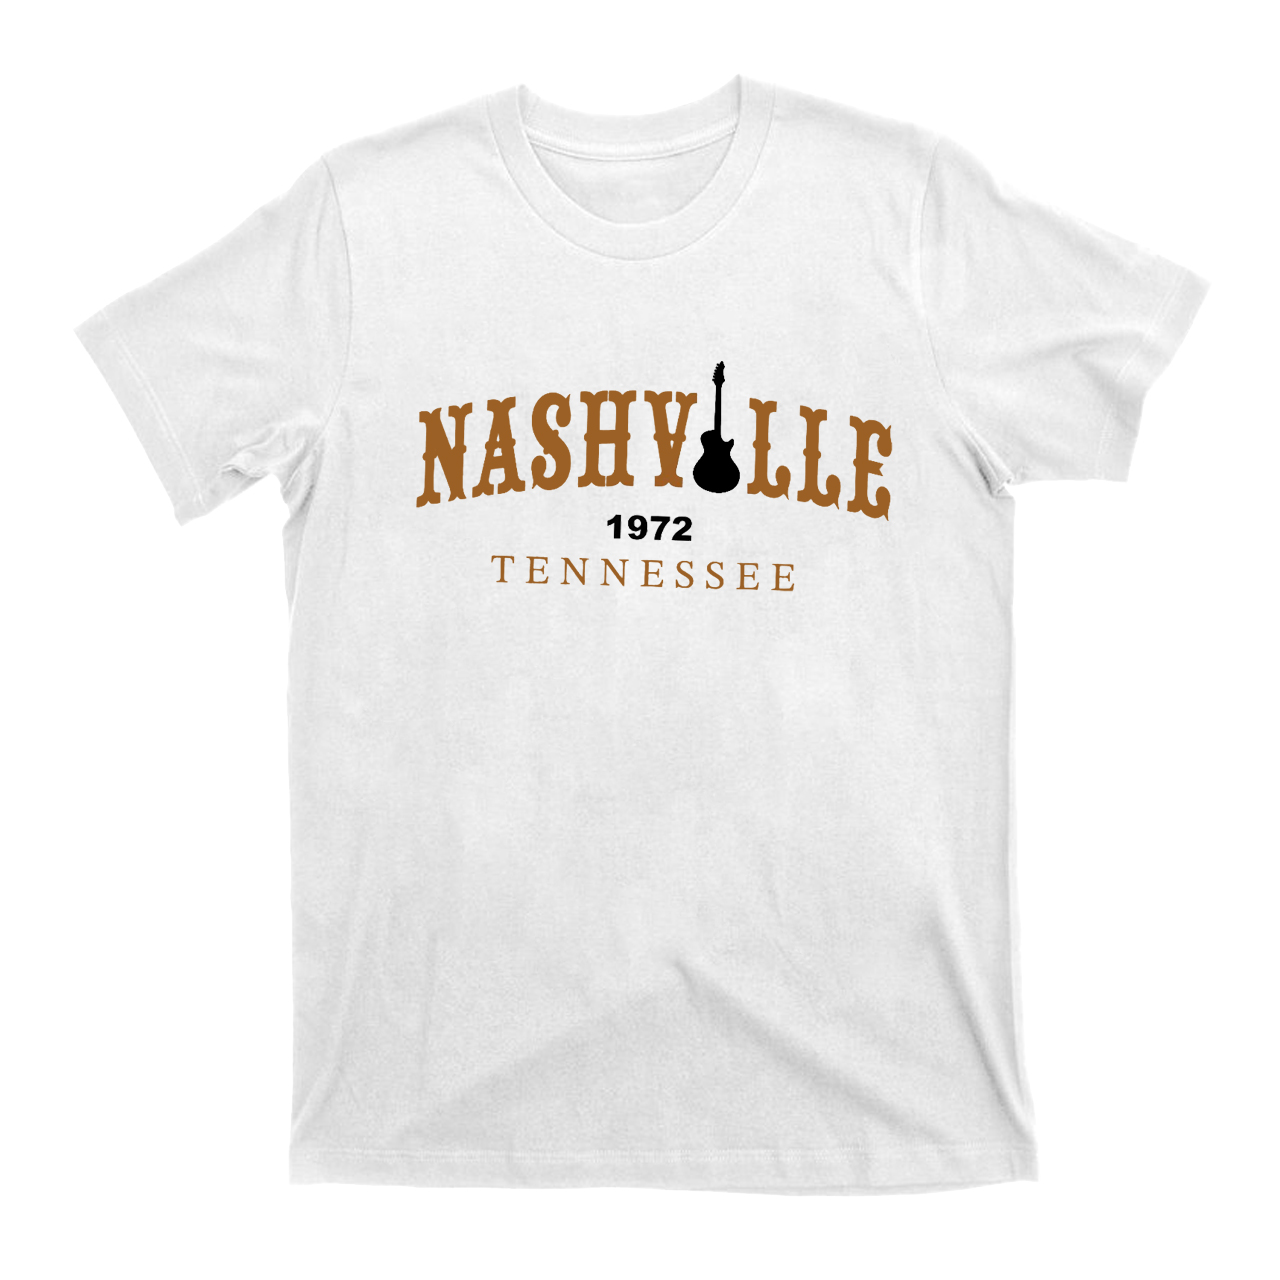 Nashville Tennessee 1972 T-Shirts